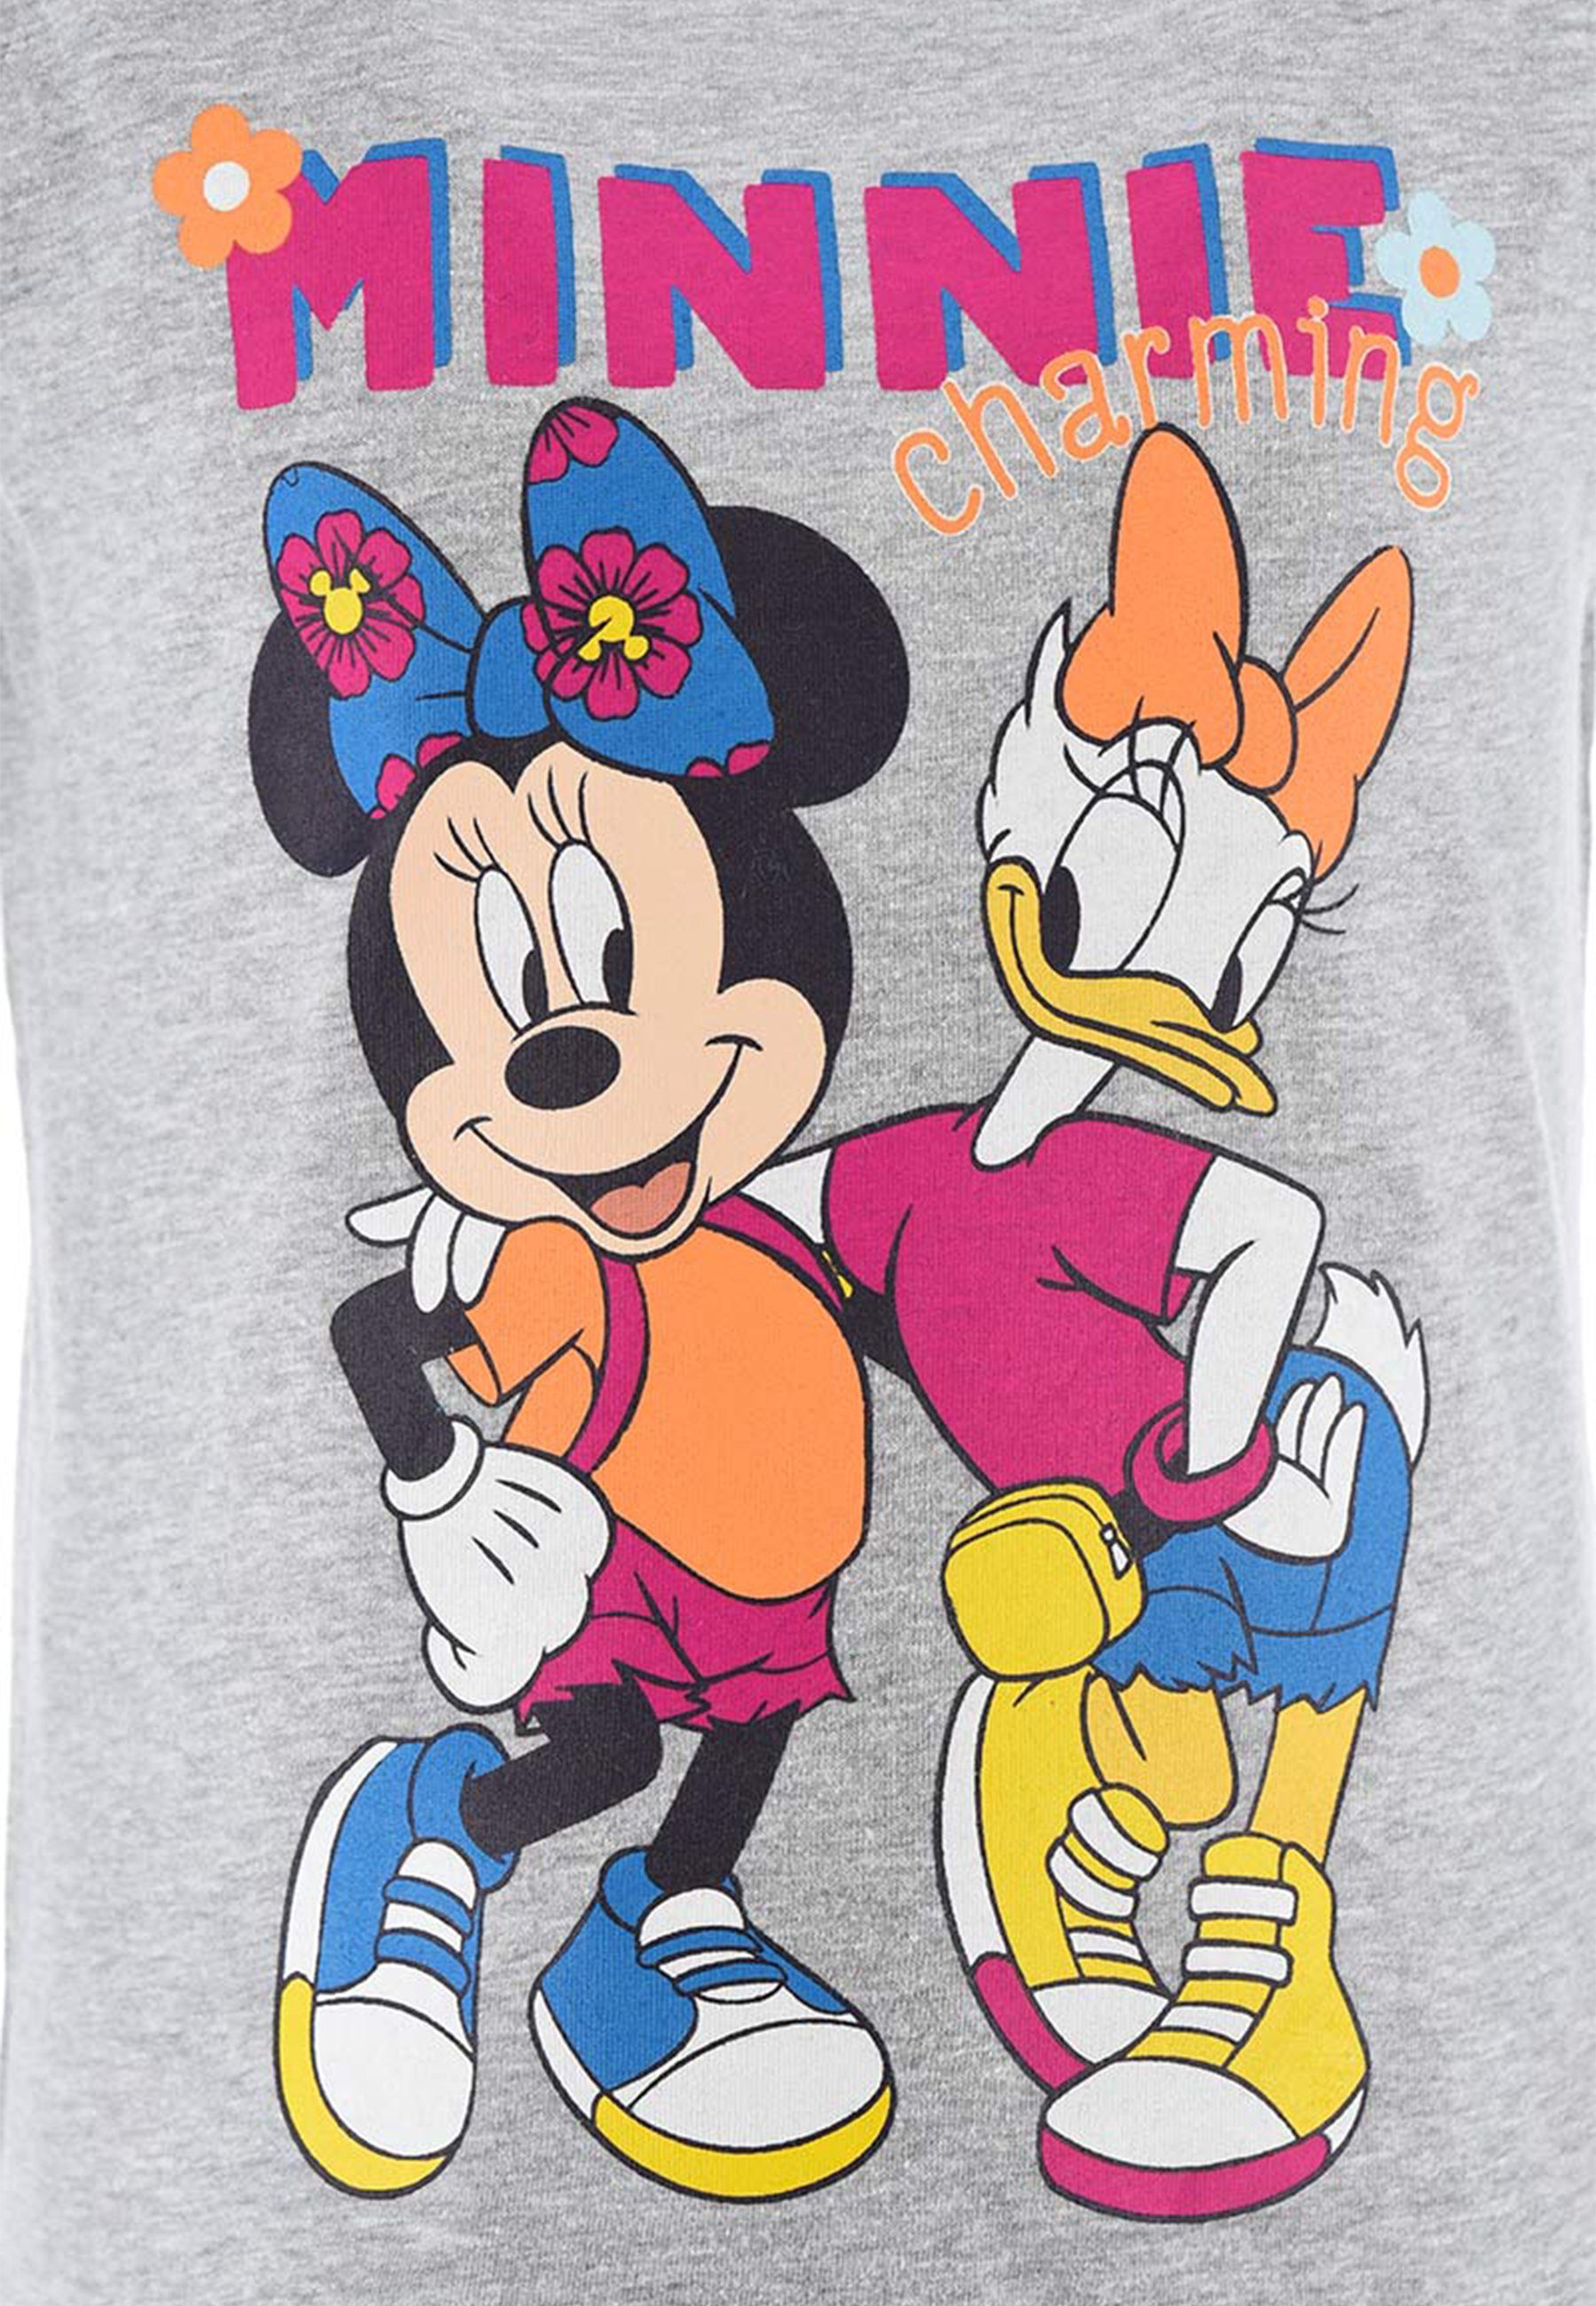 Maus T-Shirt Shorty Disney & Minnie Shorts Bekleidungs-Set Mouse Mini